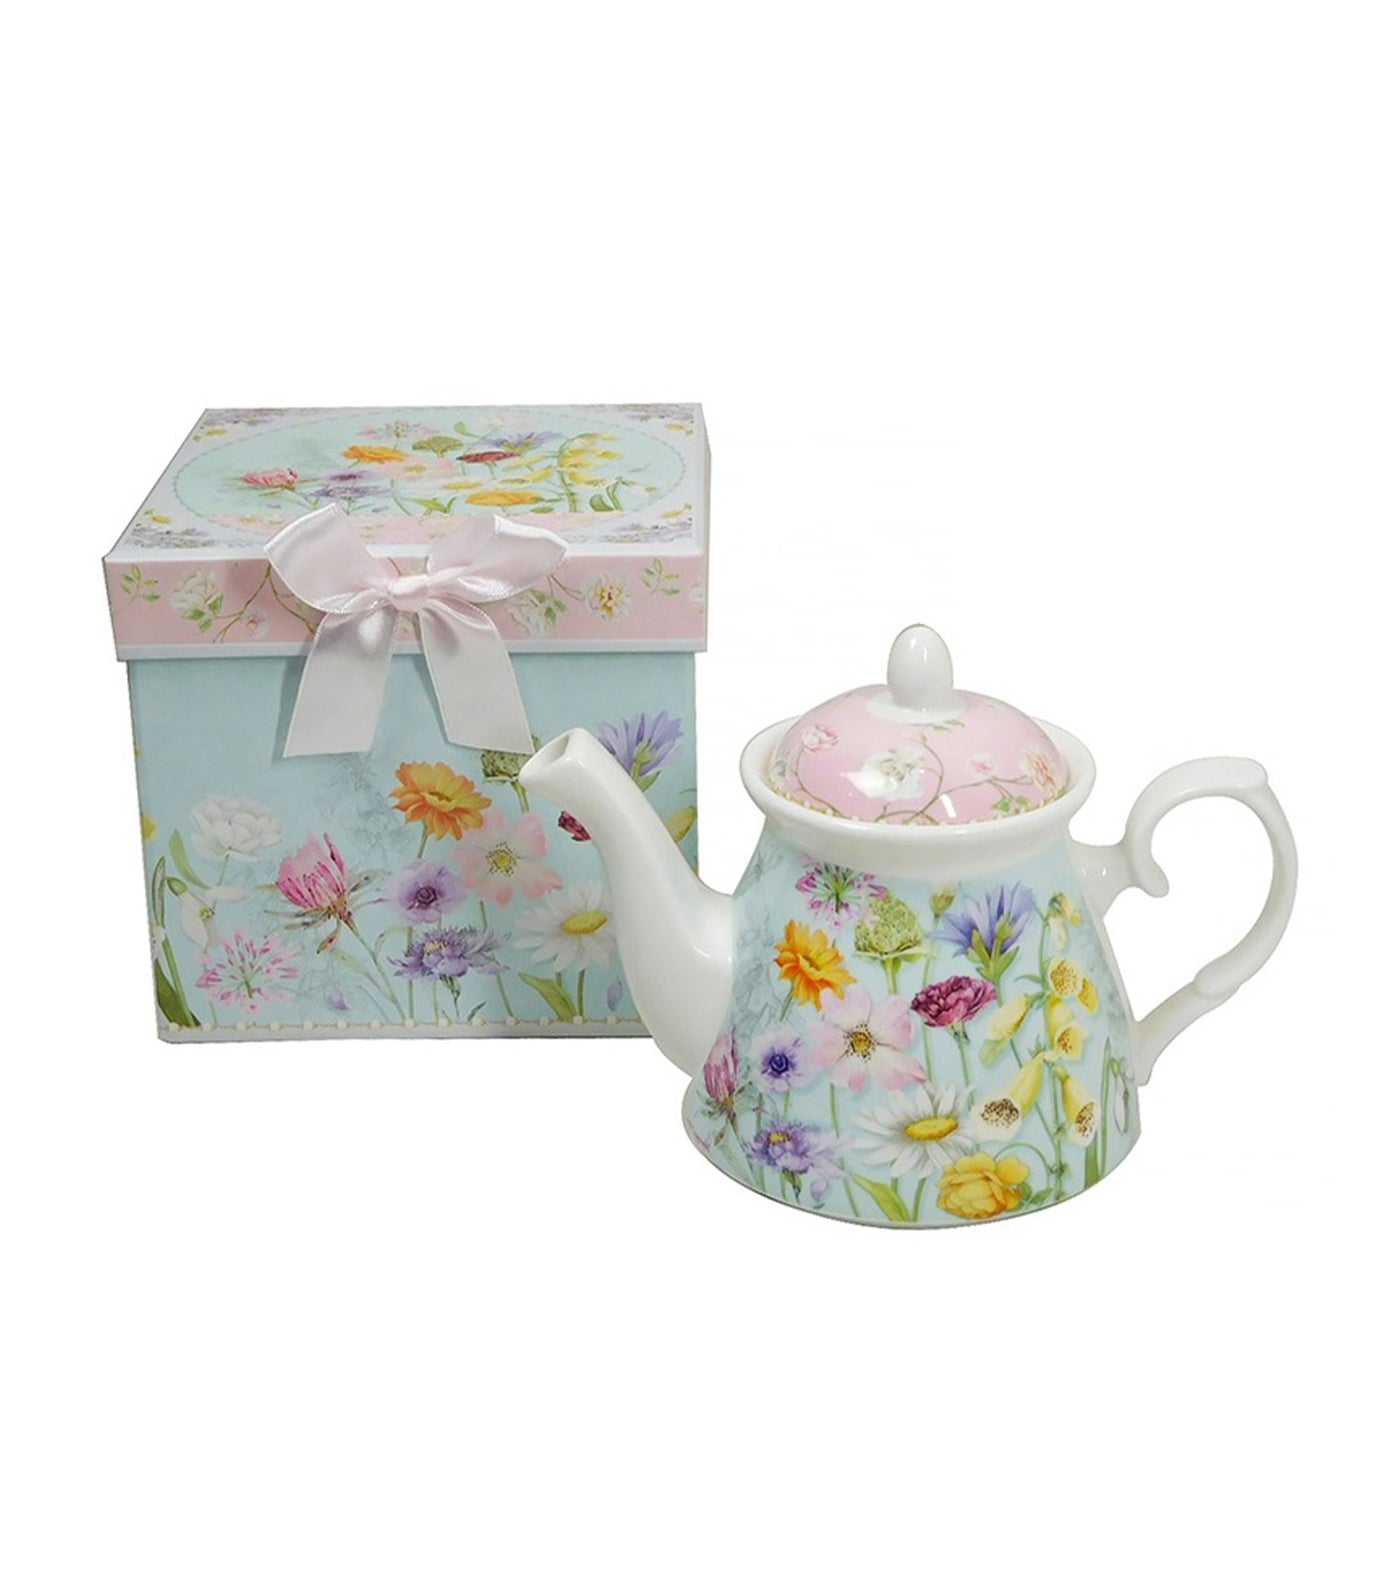 Sugarplum Lifestyle Tea Pot in Gift Box